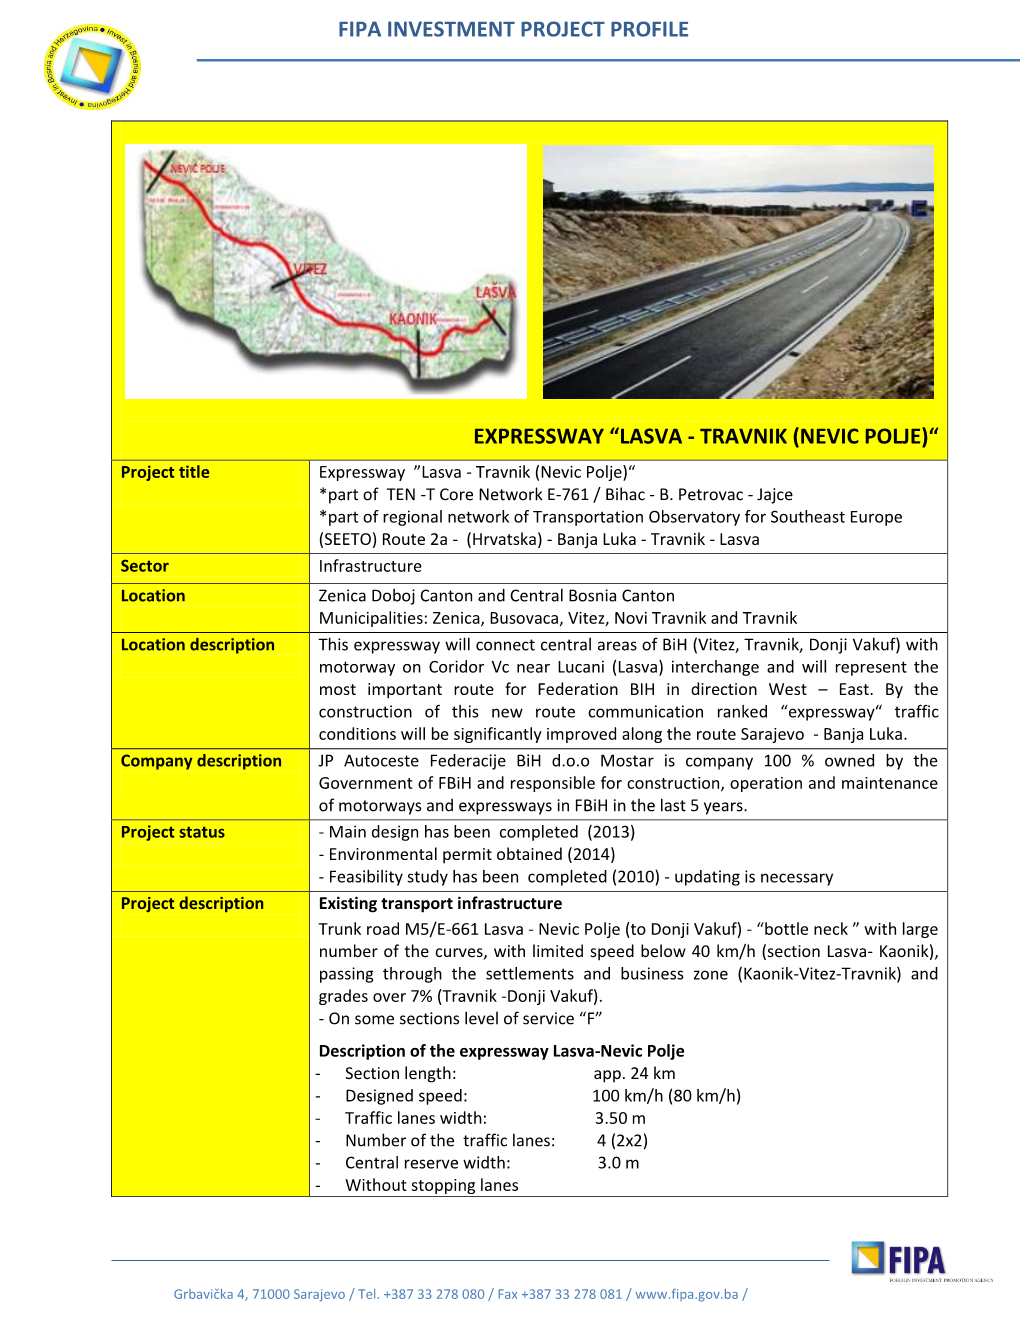 Fipa Investment Project Profile Expressway “Lasva